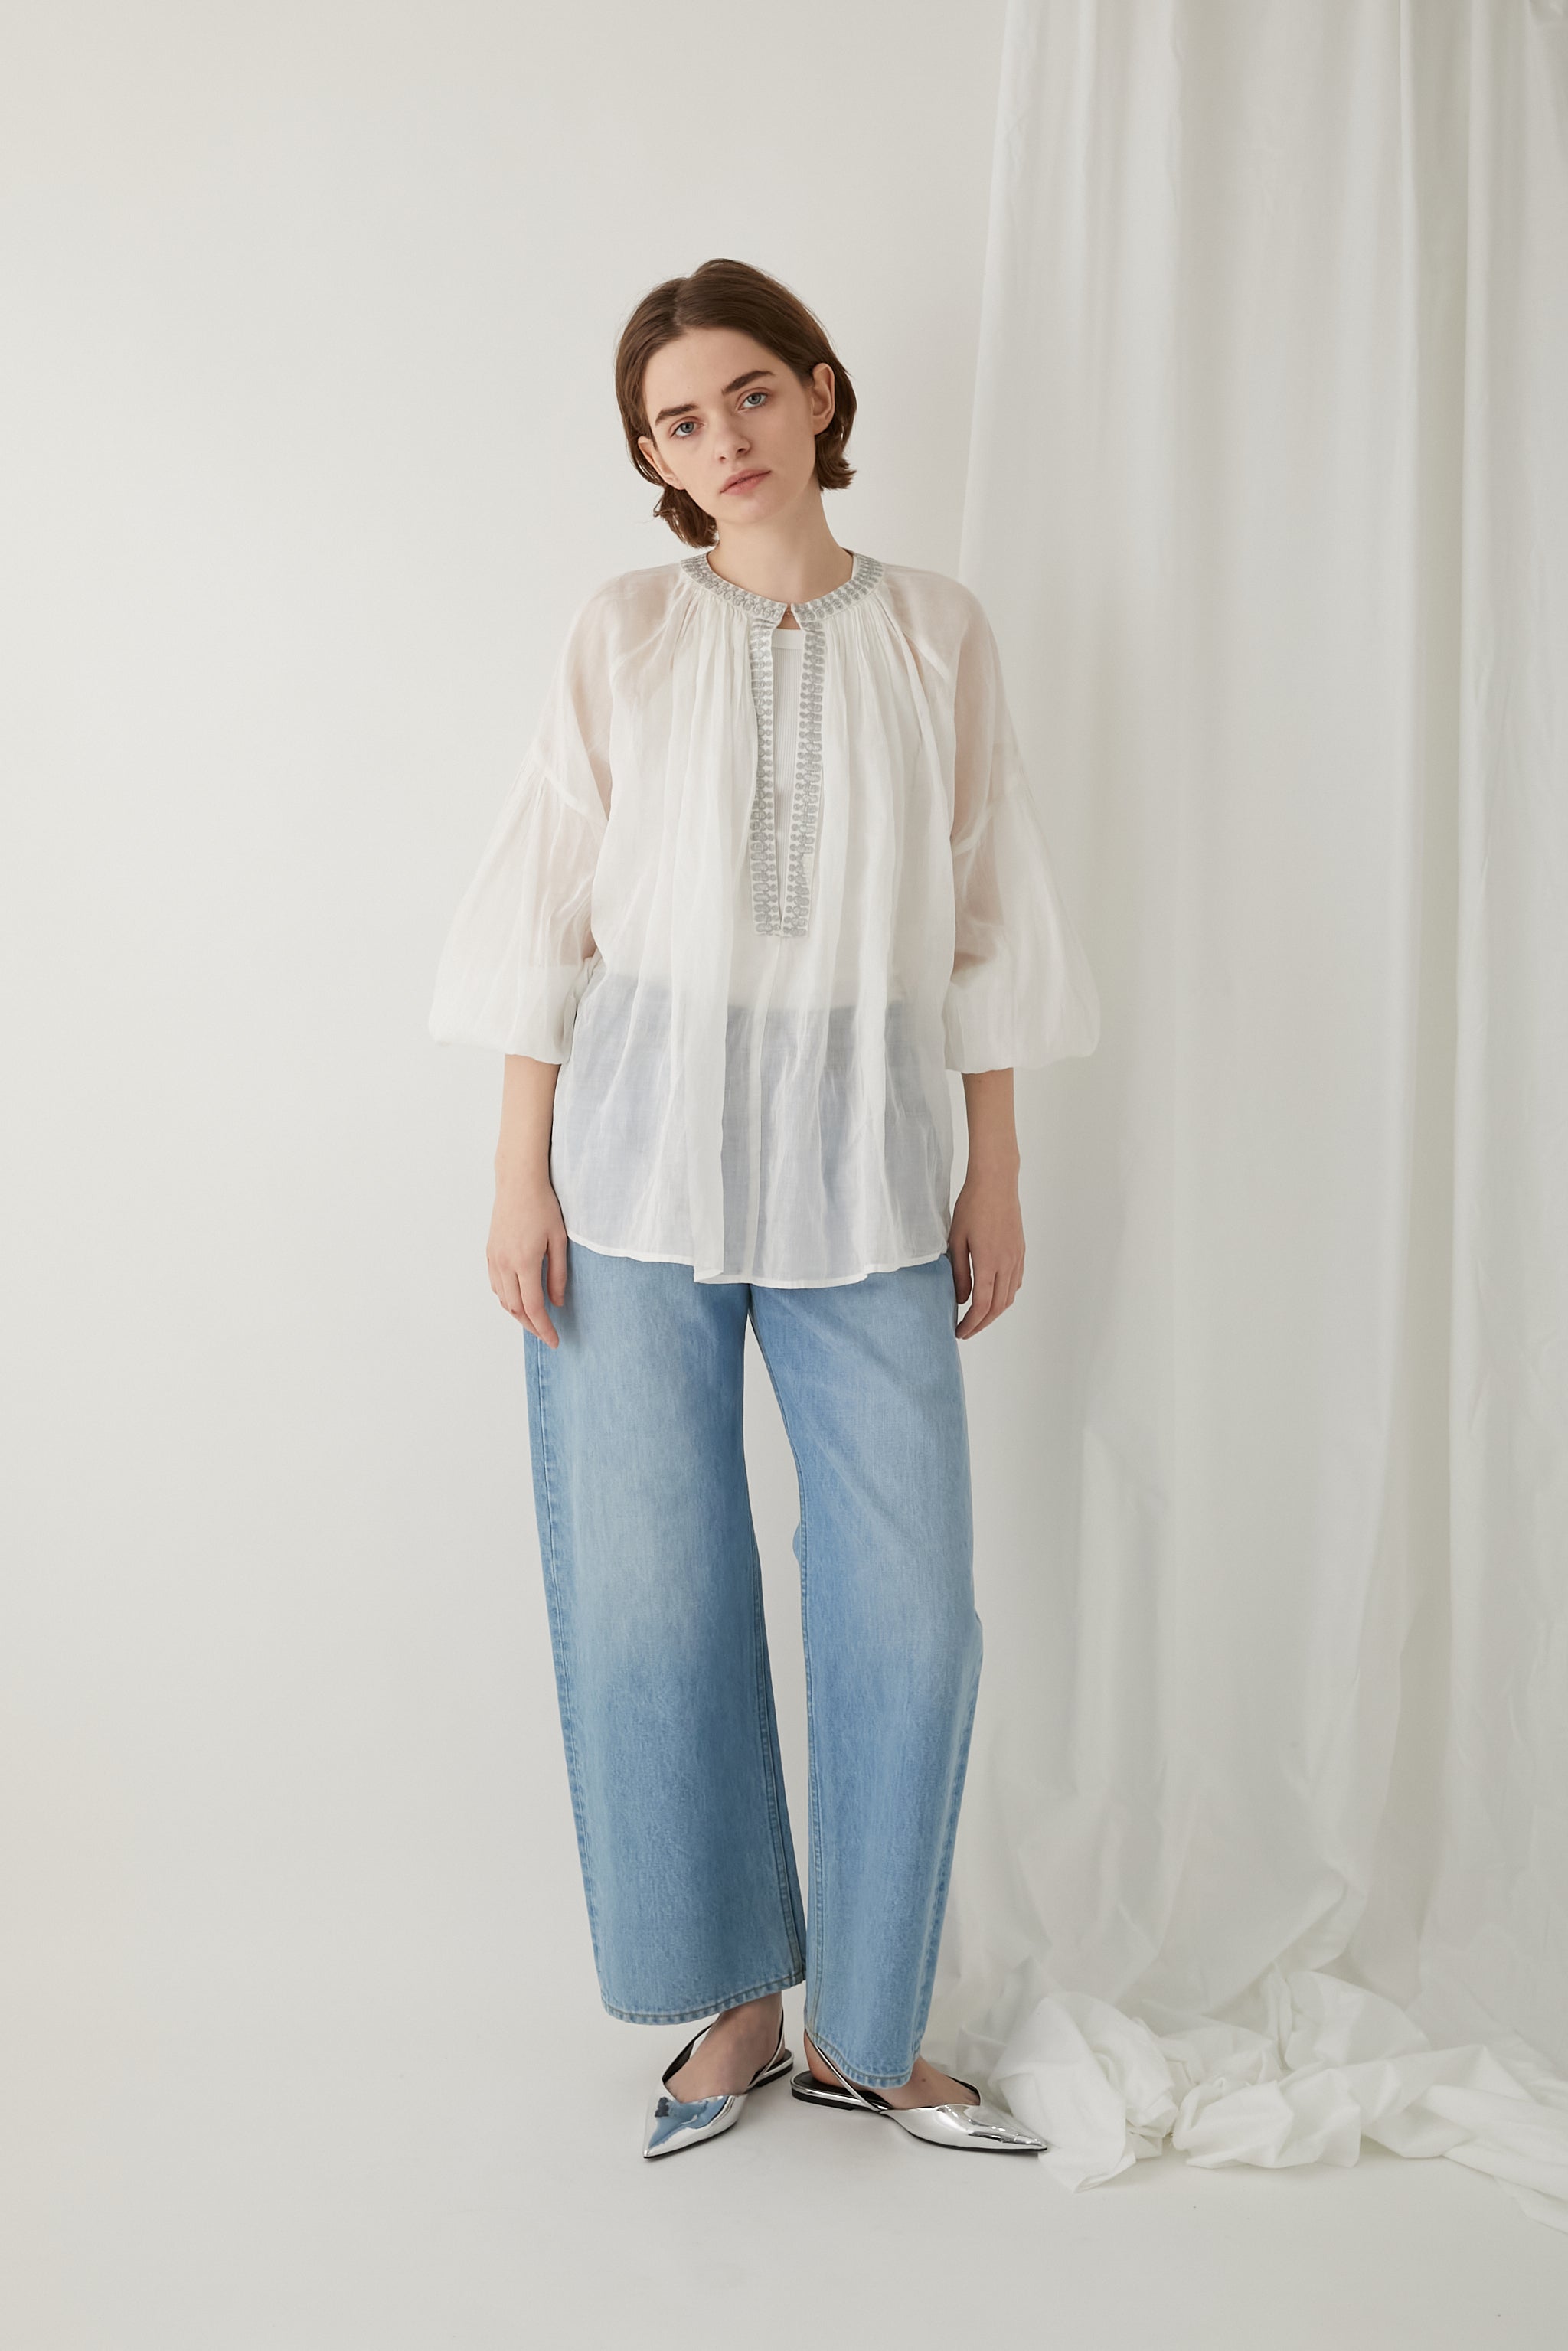 sheer cotton deco tape blouse │  WHITE